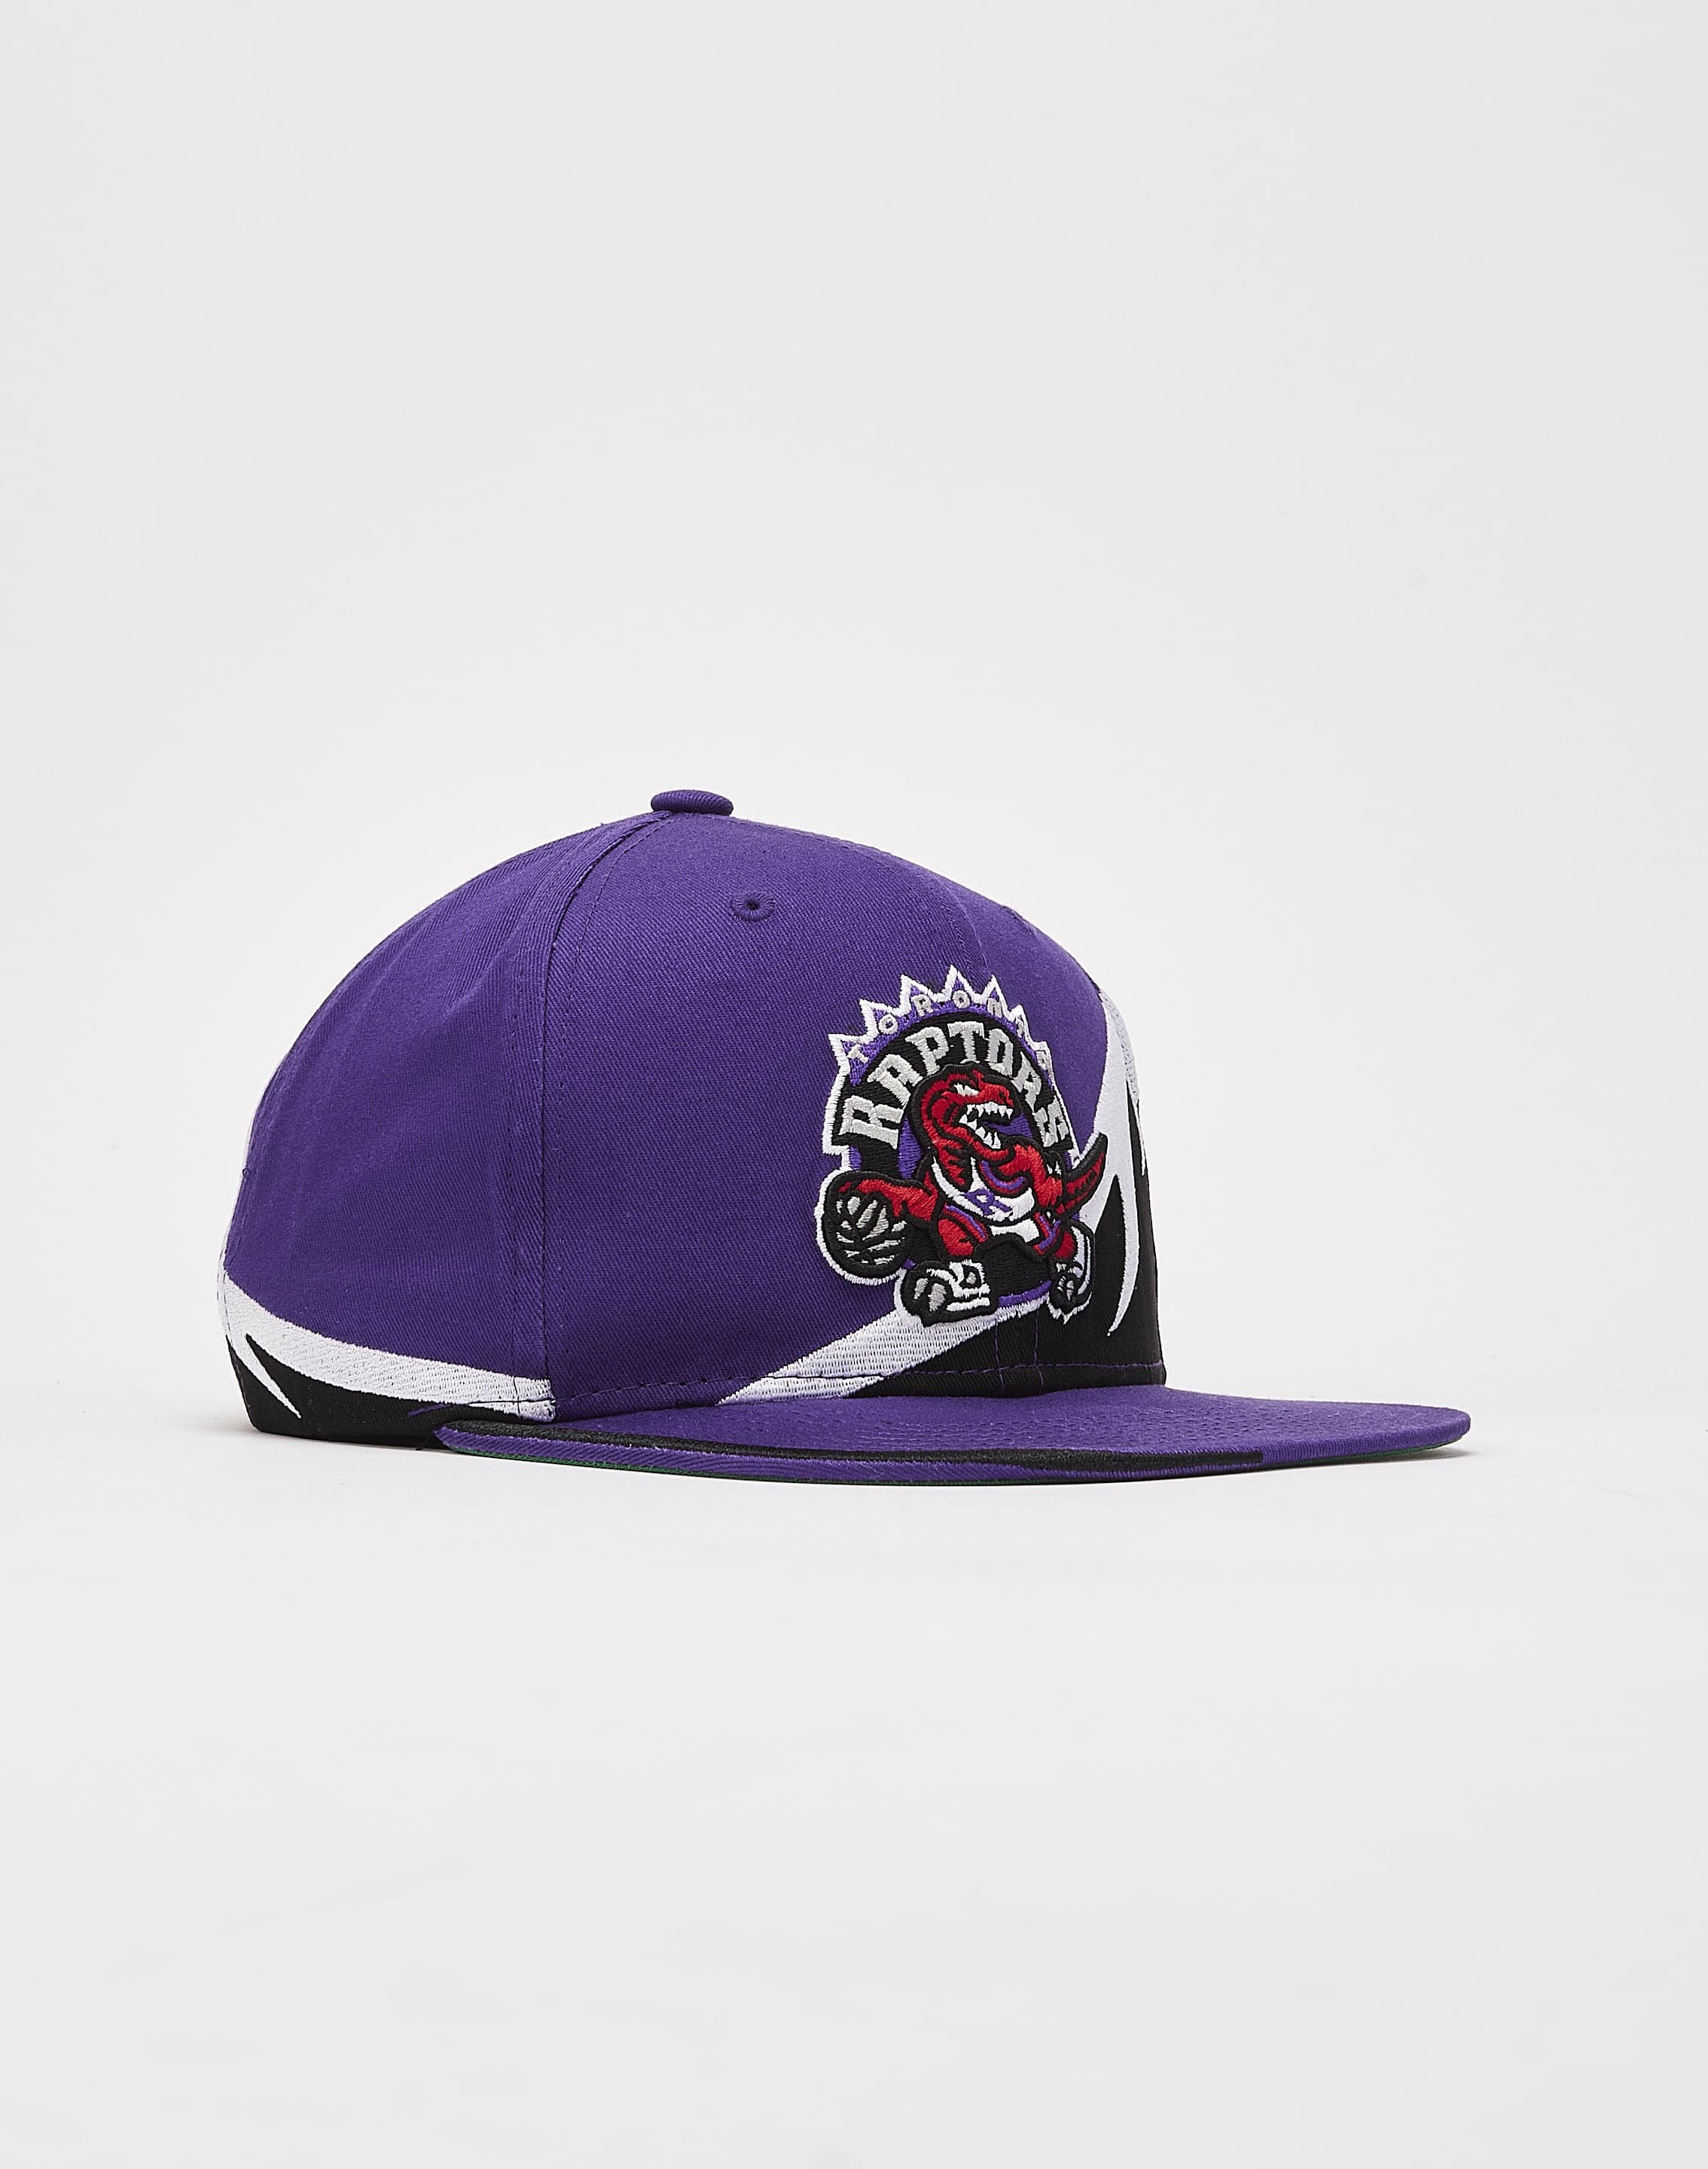 NBA Toronto Raptors Adidas Logo Under Brim Snap Back Cap Hat Style